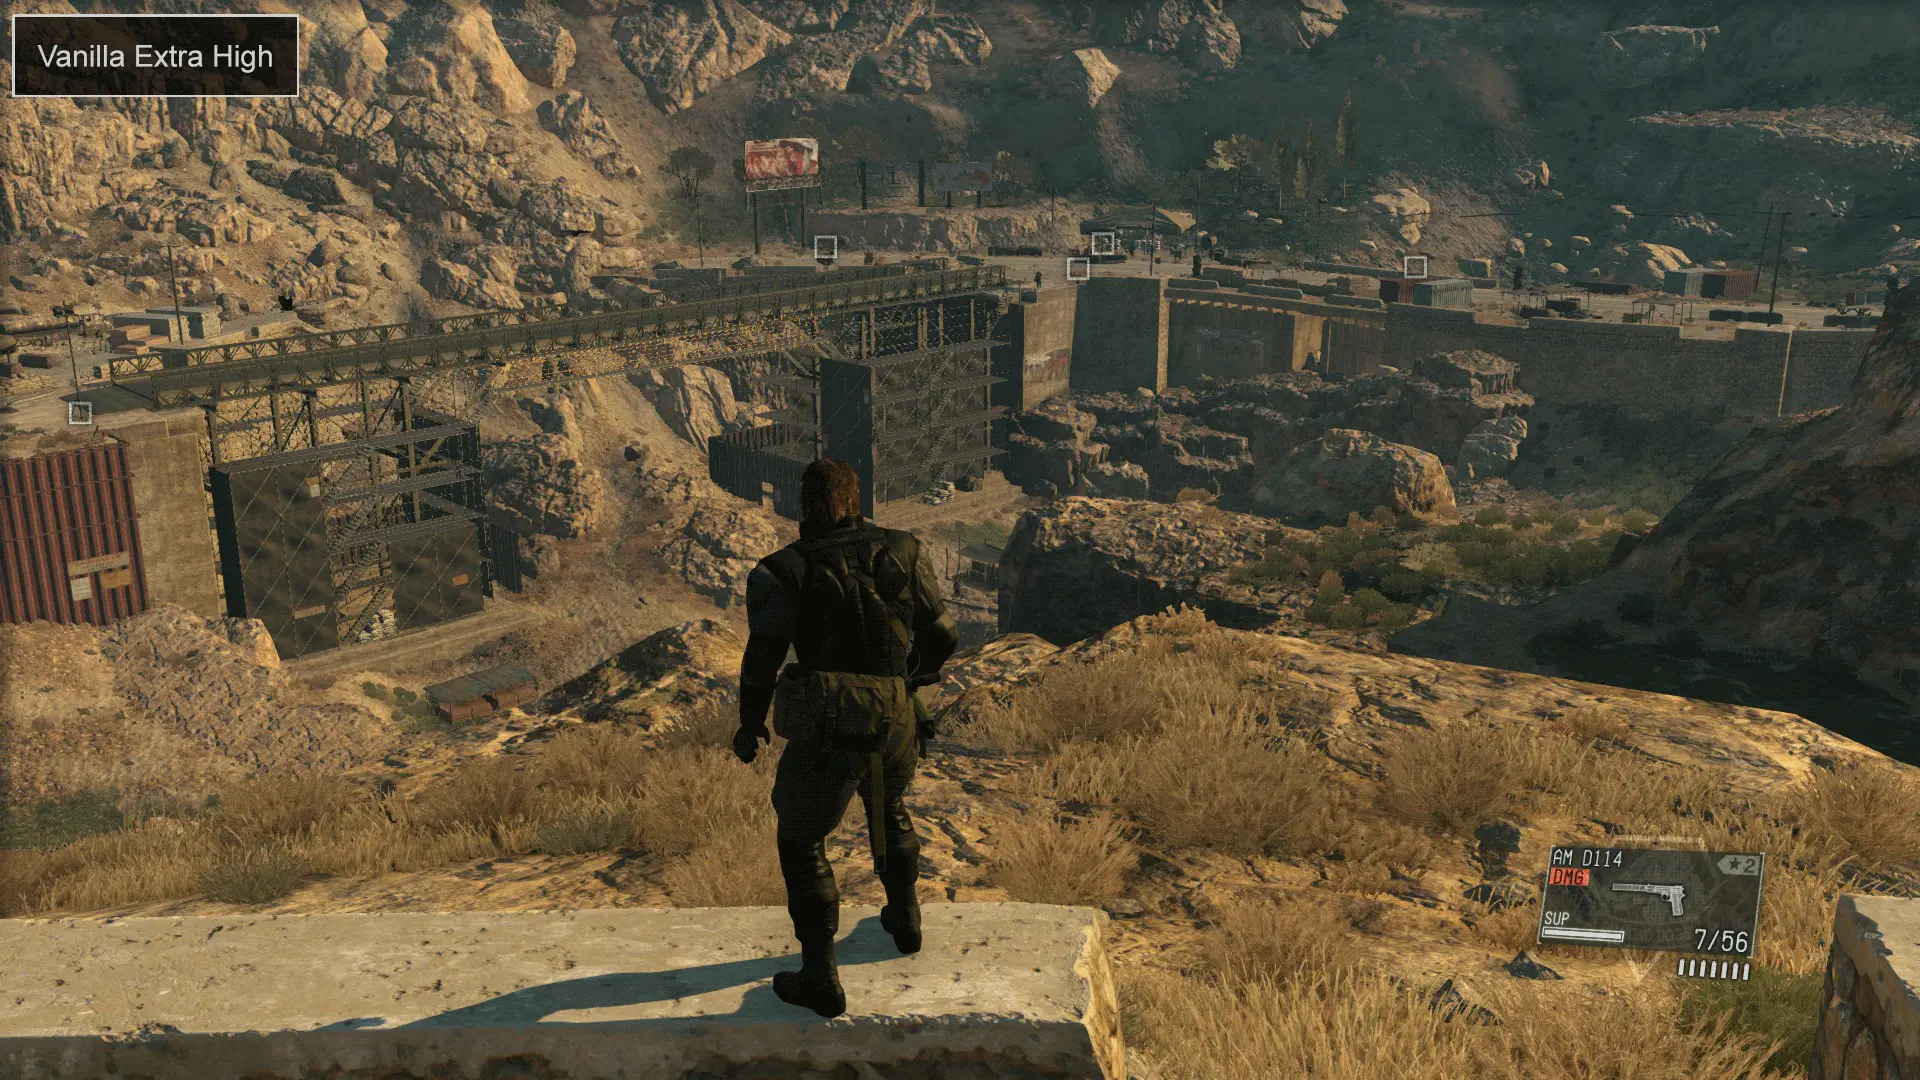 Metal Gear Solid 5 The Phantom Pain Beyond Ultra settings Mod Comparison Screenshots-7